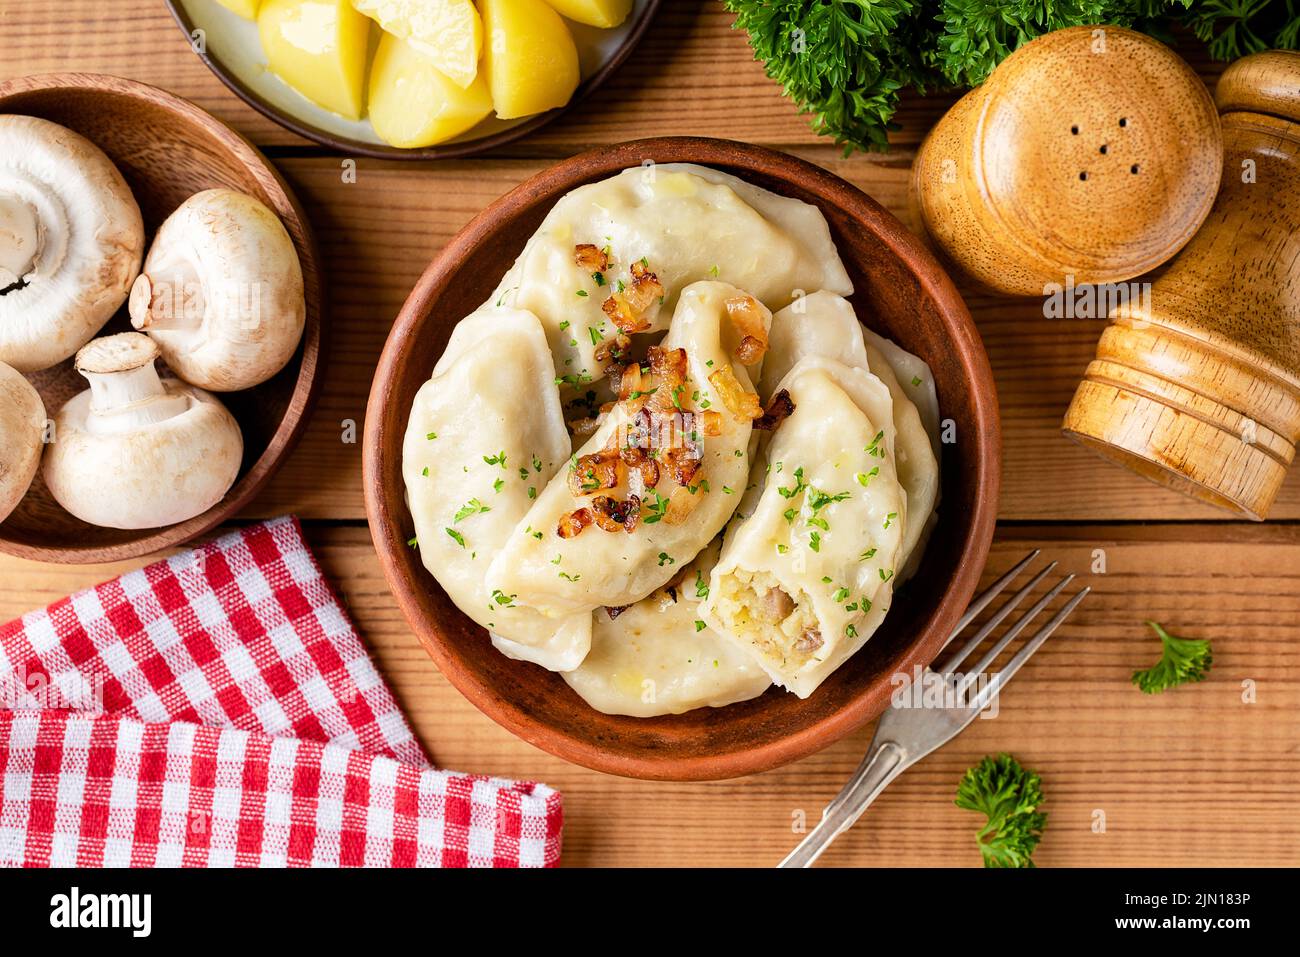 Pierogi, vareniky or potato dumplings in clay bowl on wooden table background, top view. Traditional Ukrainian cuisine food Stock Photo